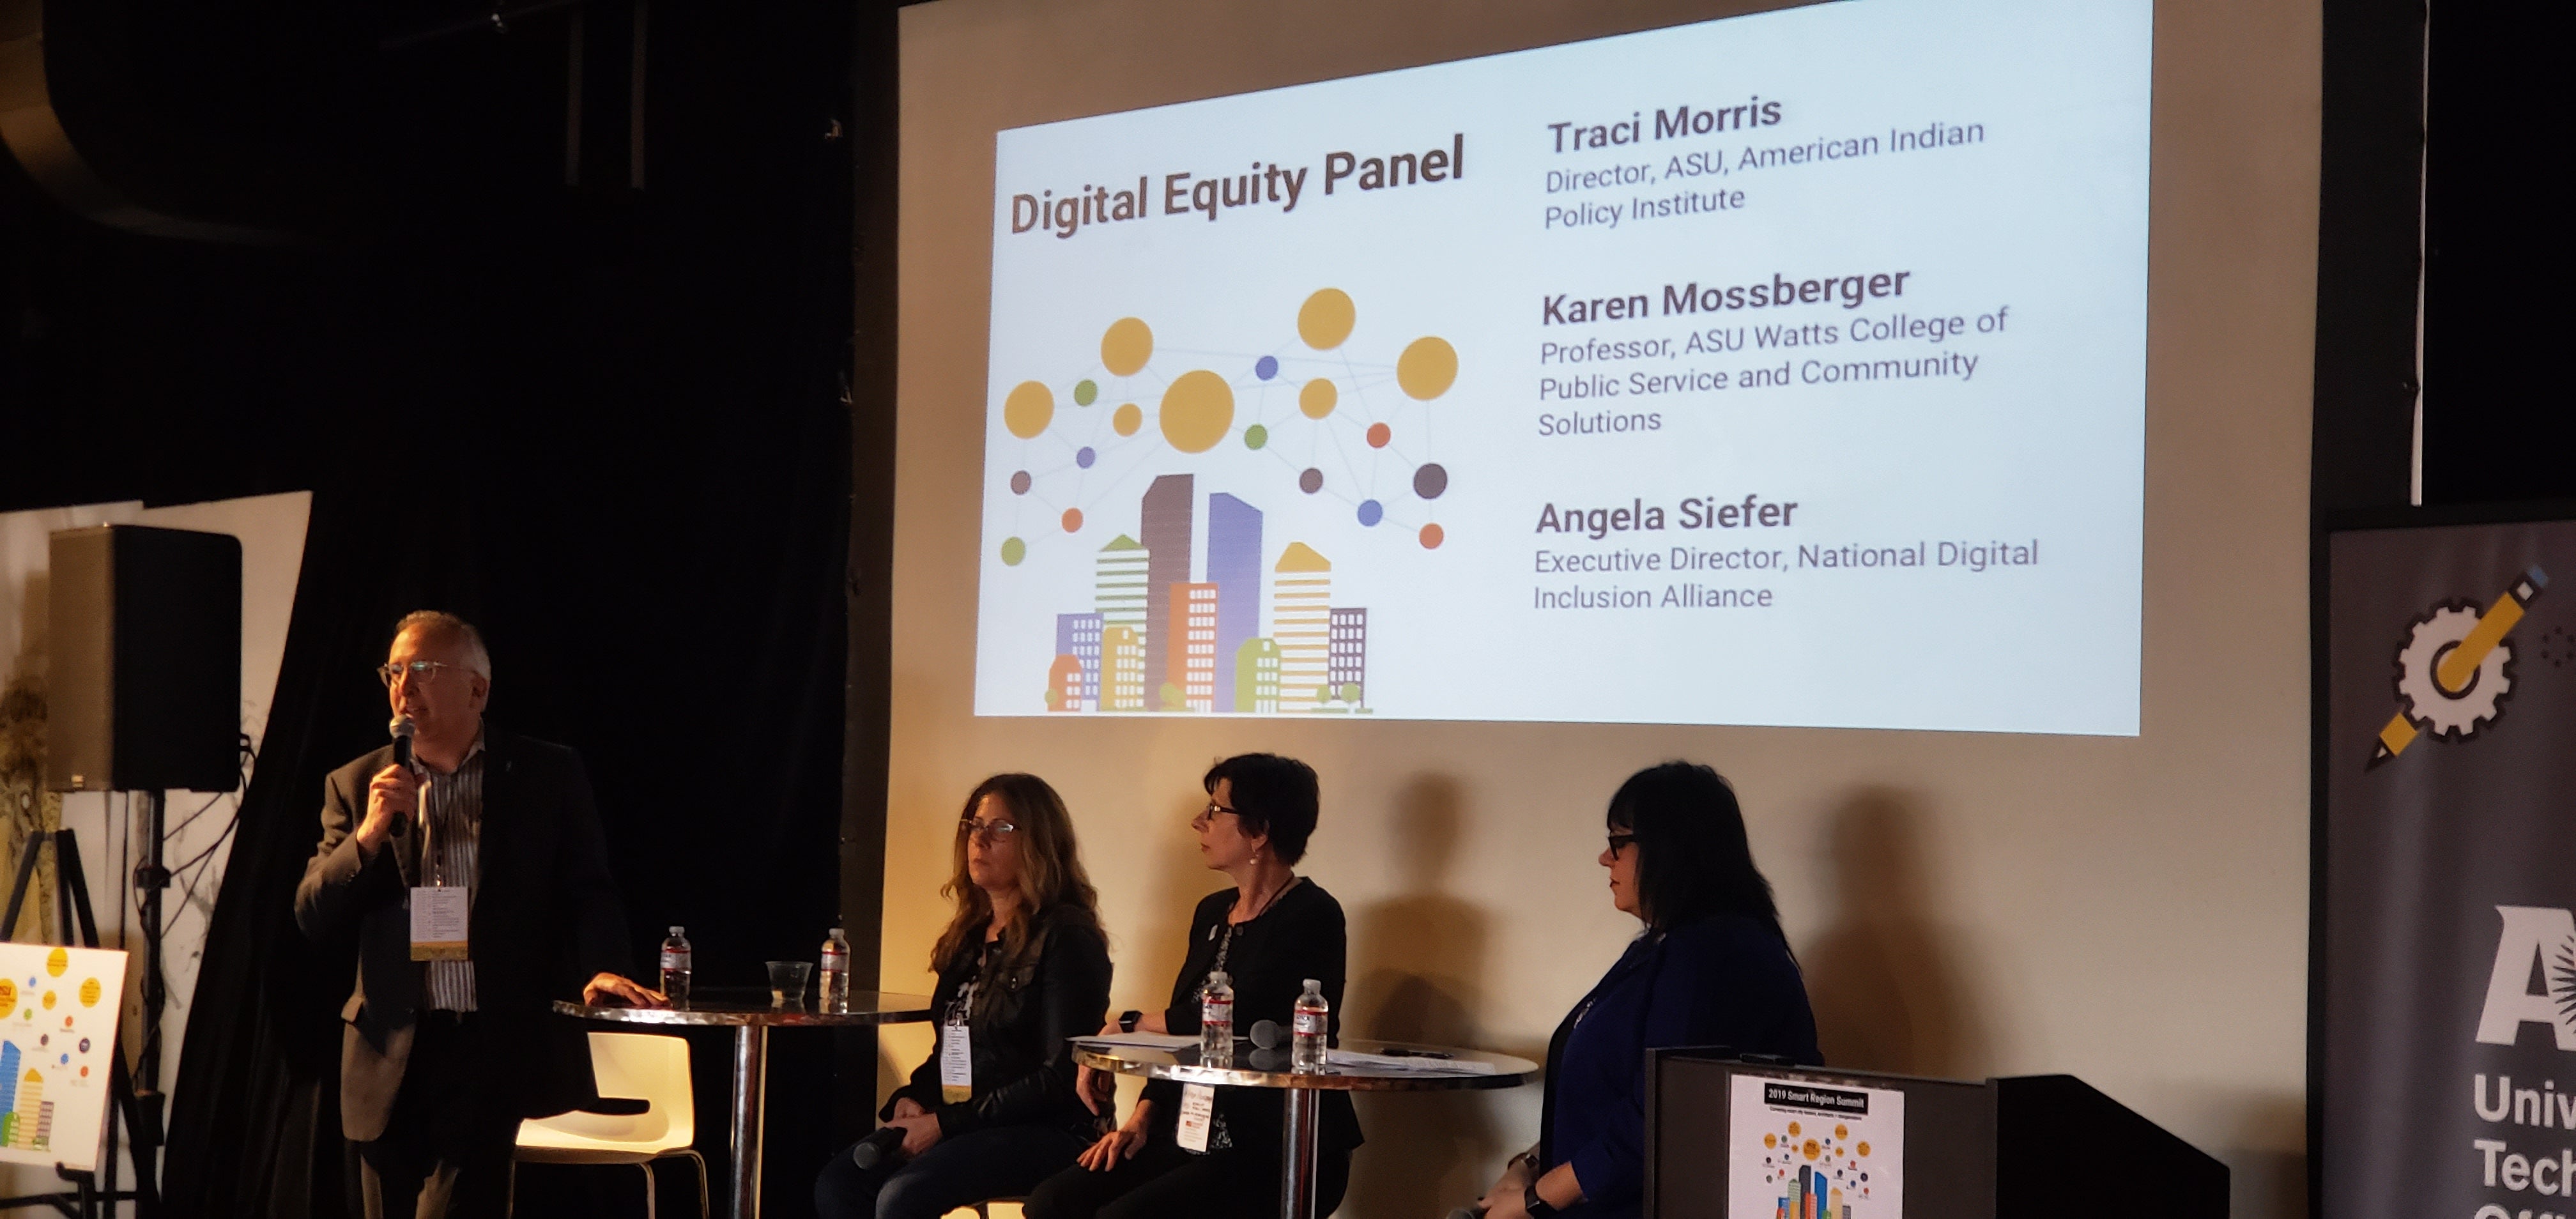 Digital Equity Panel